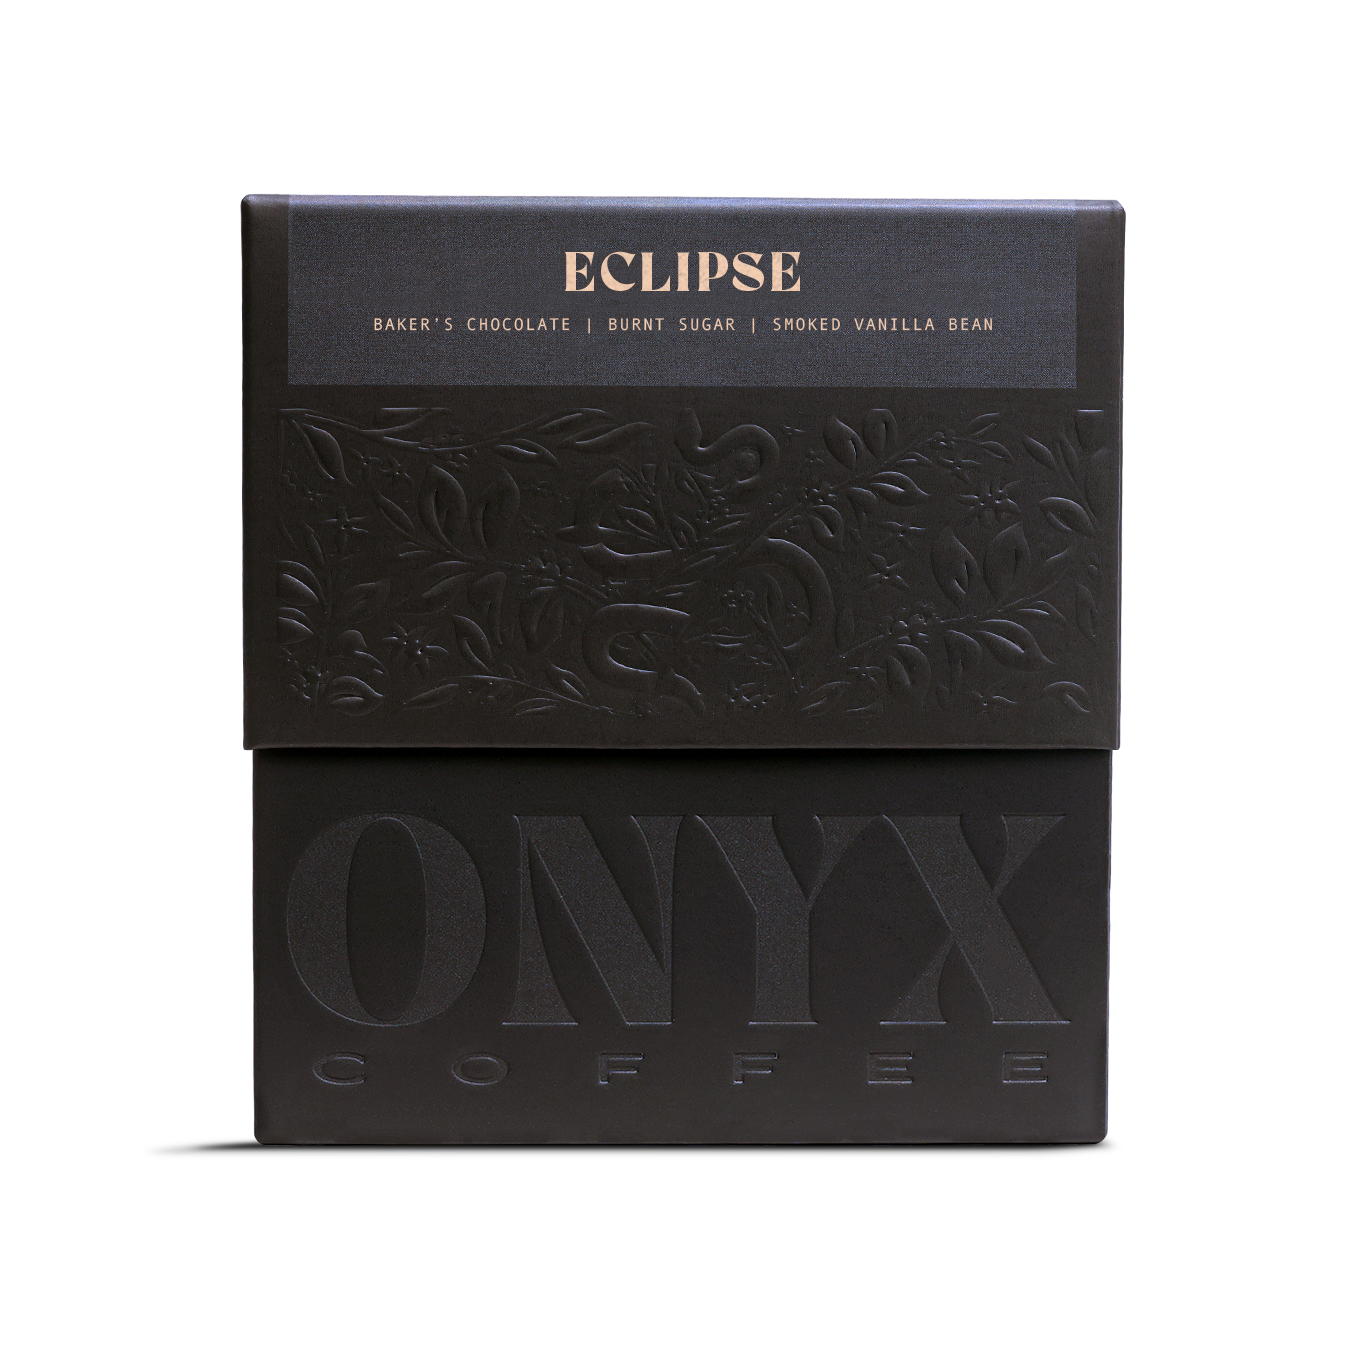 Eclipse by Onyx Coffee Lab